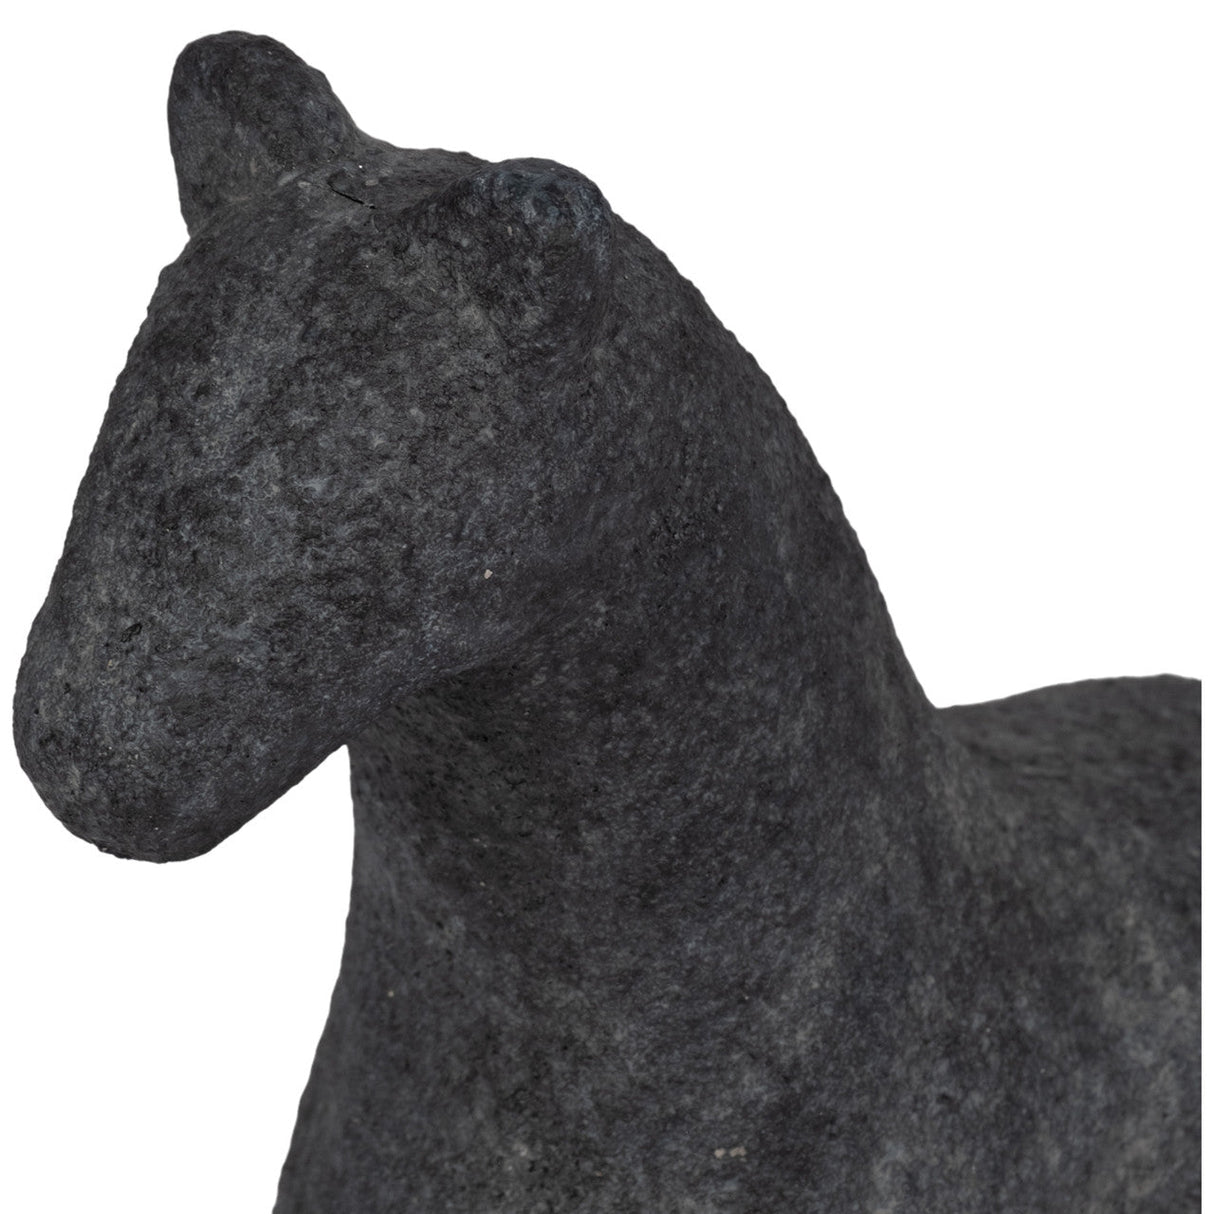 9" Textured Horse, Black